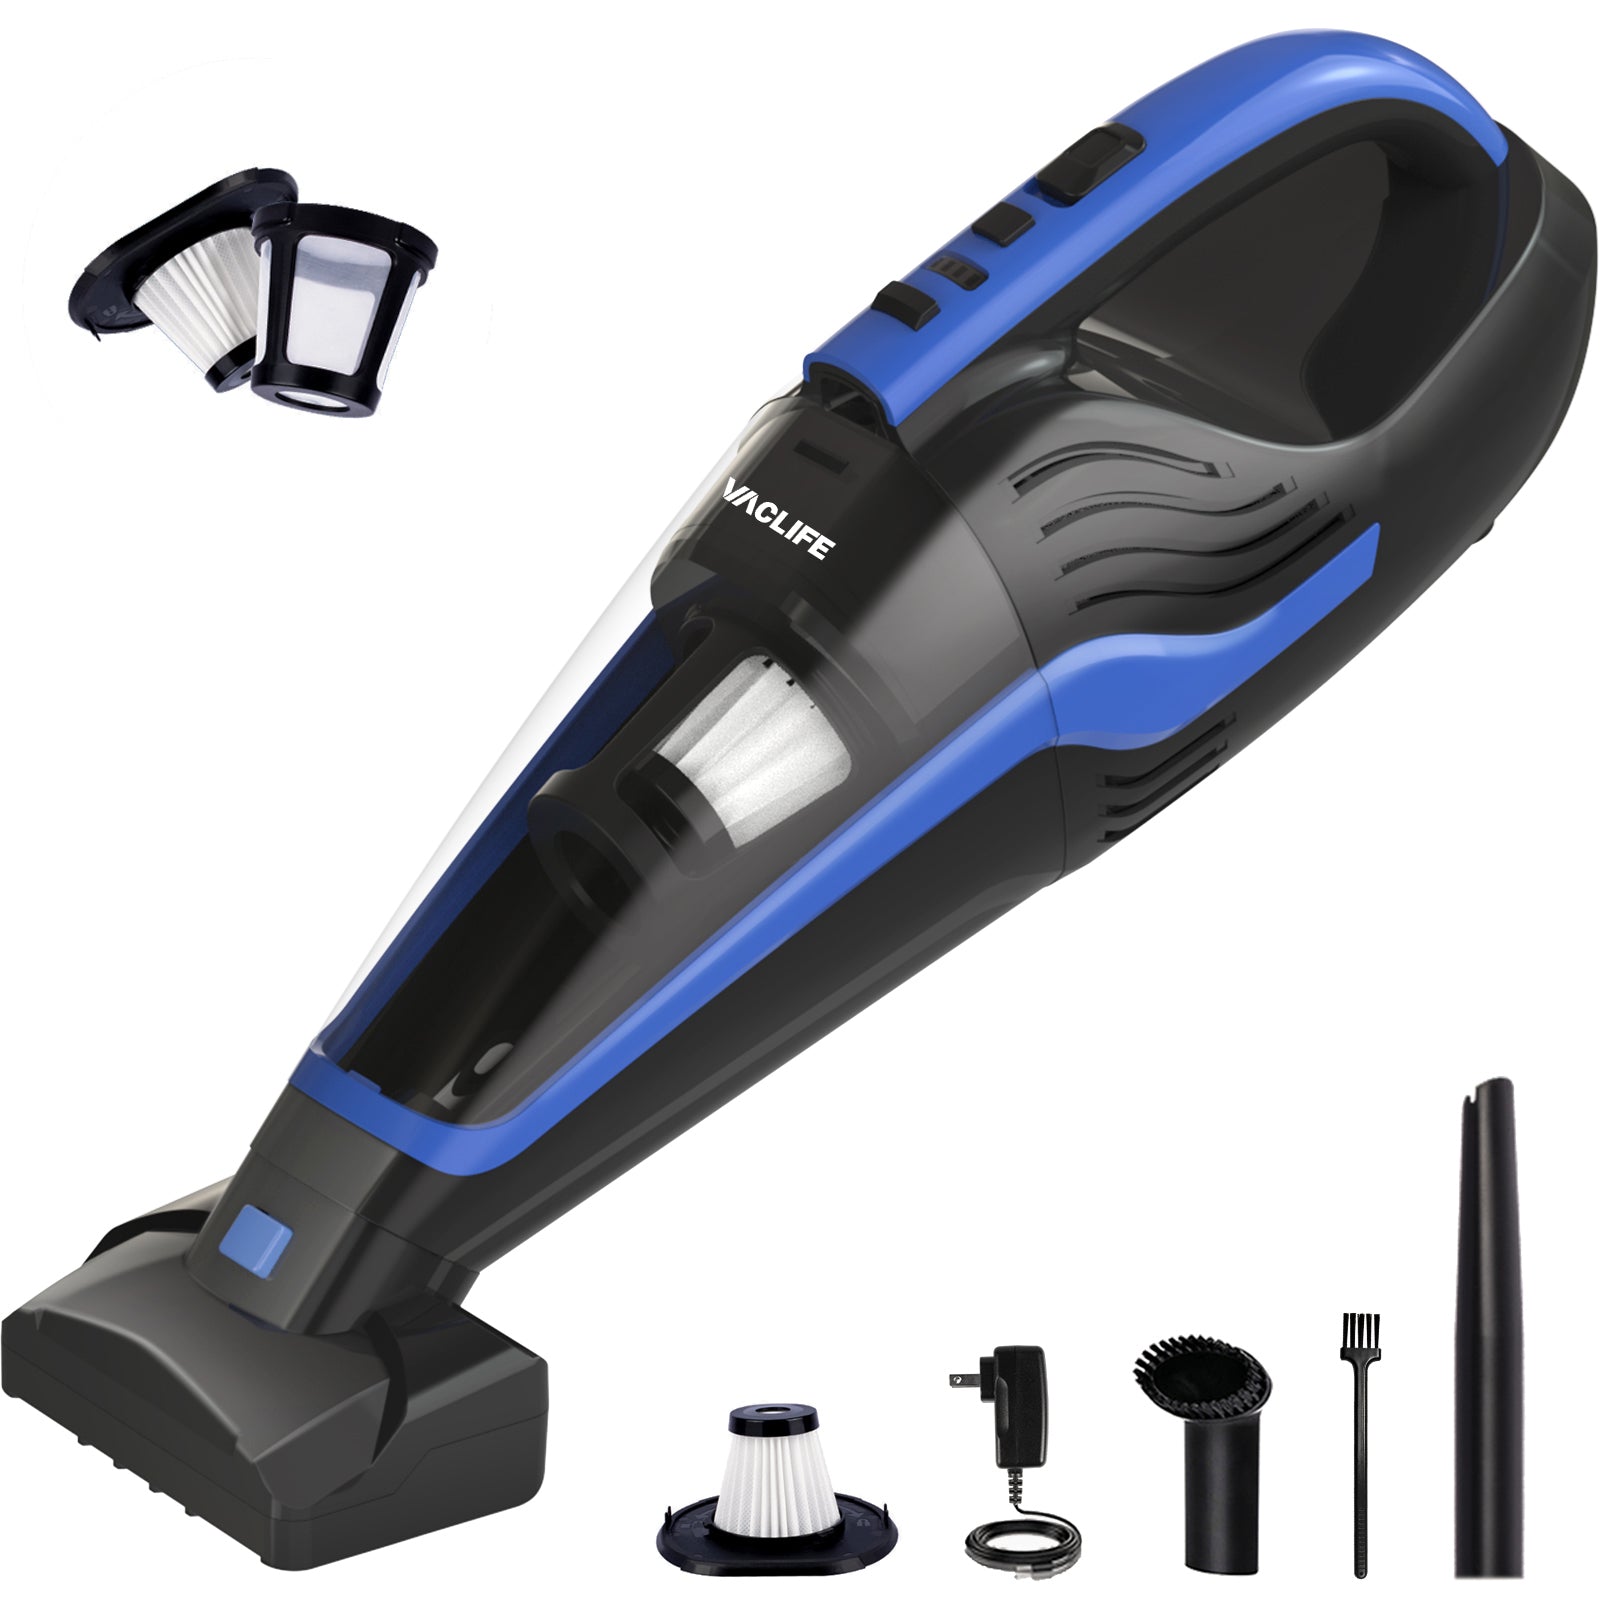 VacLife Handheld Vacuum, Car Hand Vacuum Cleaner Cordless, Mini Portable  Rechargeable Vacuum Cleaner with 2 Filters, Orange (VL189)